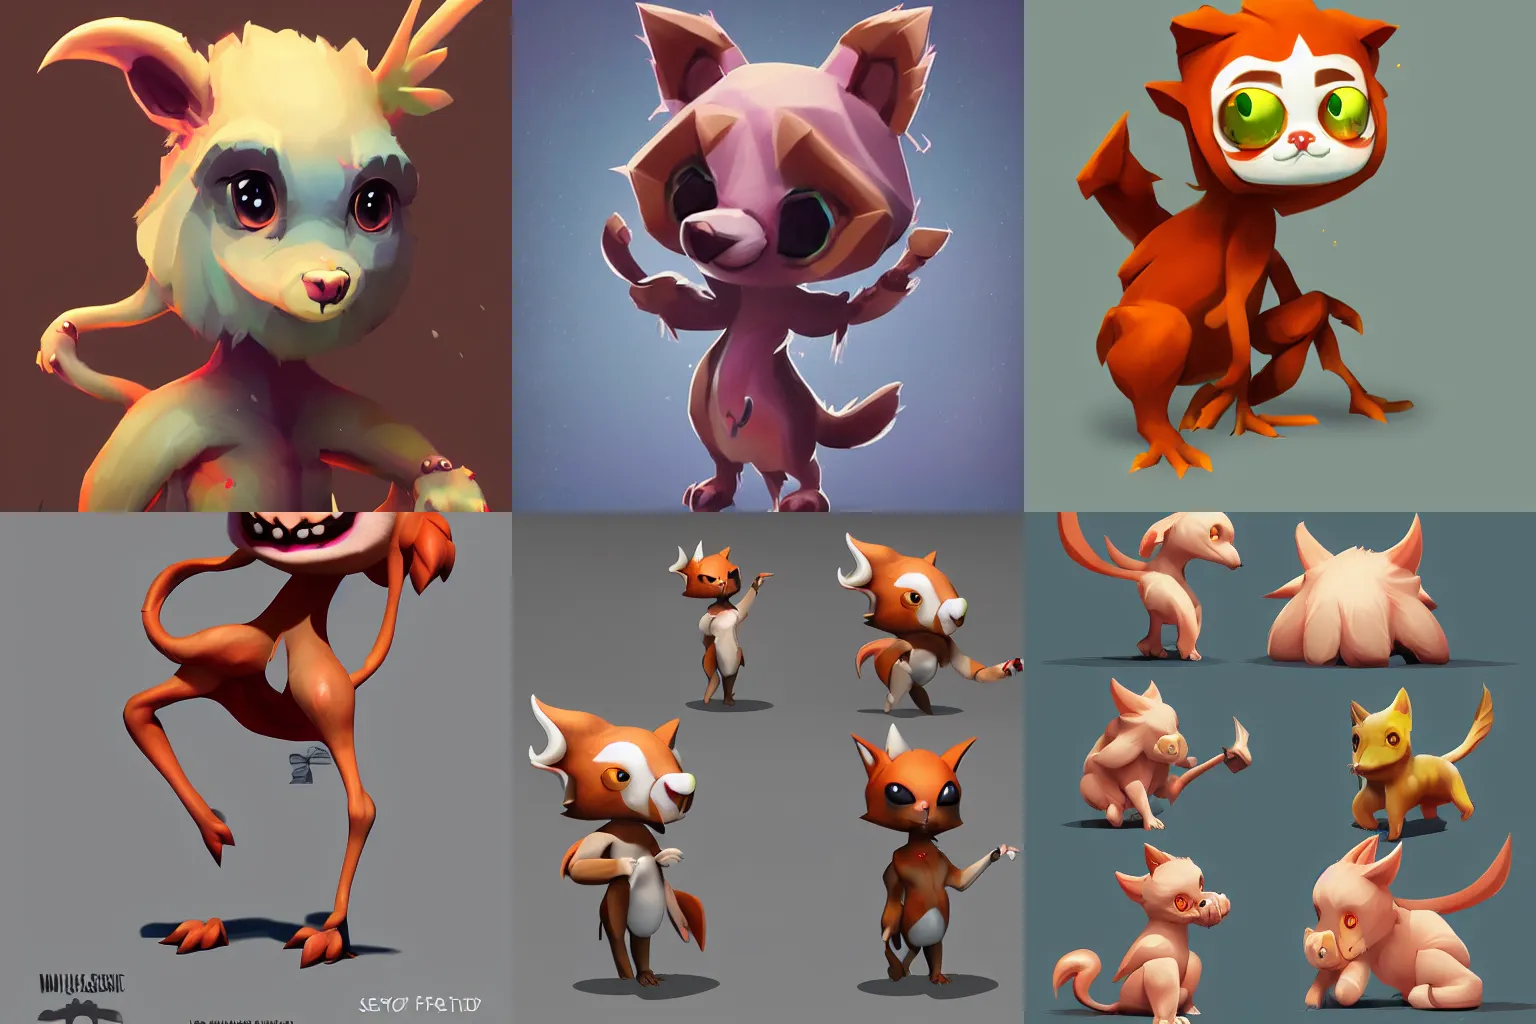 Prompt: stylized cute creature pet fantasy character design, dynamic pose, stunning illustration trending on artstation